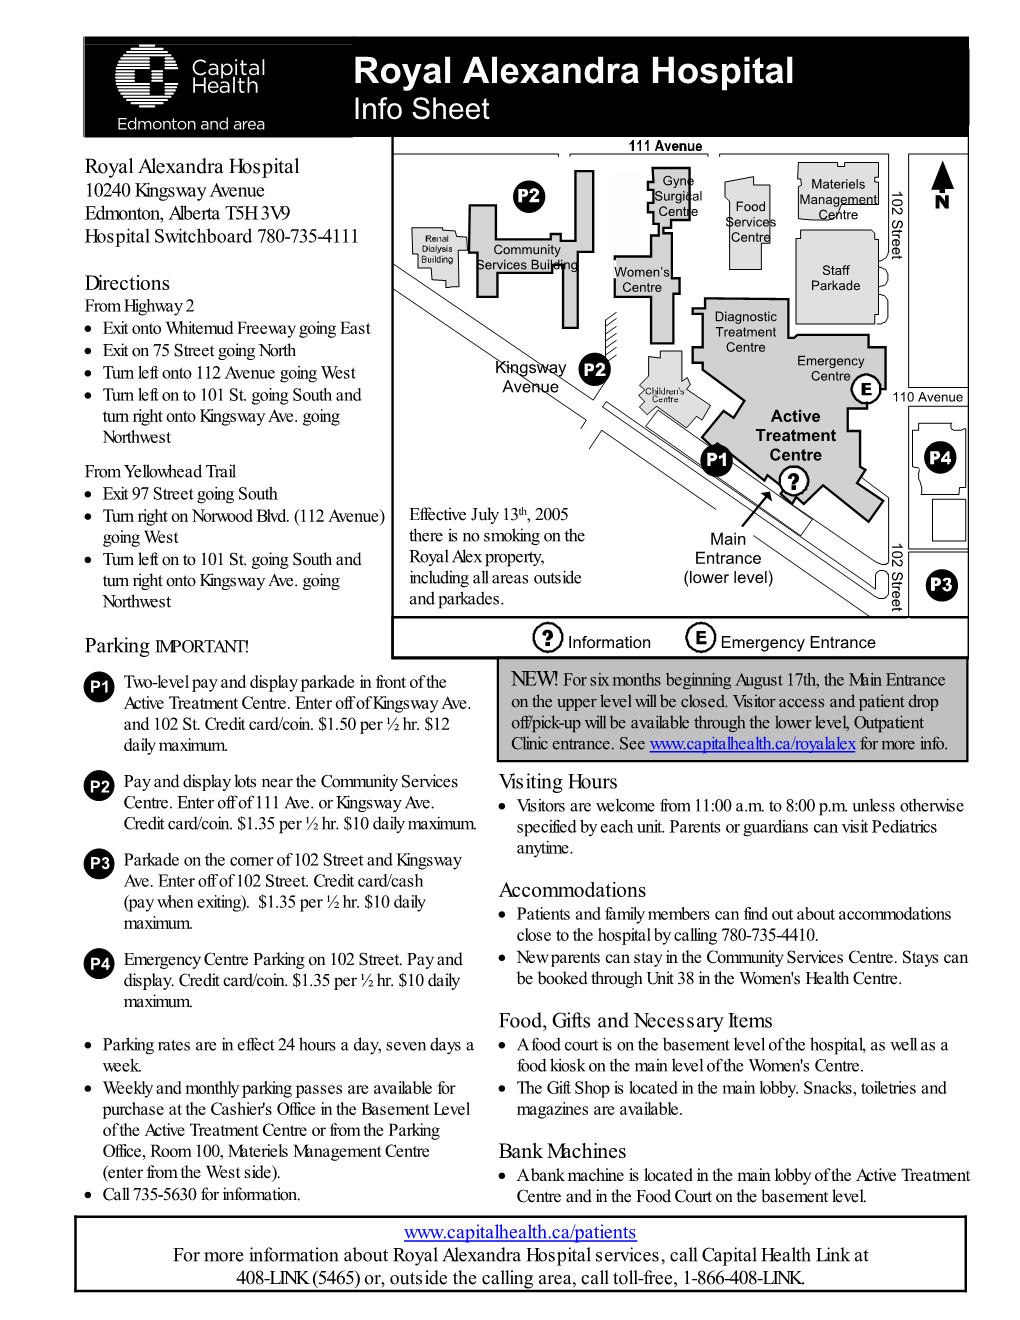 Royal Alexandra Hospital Info Sheet